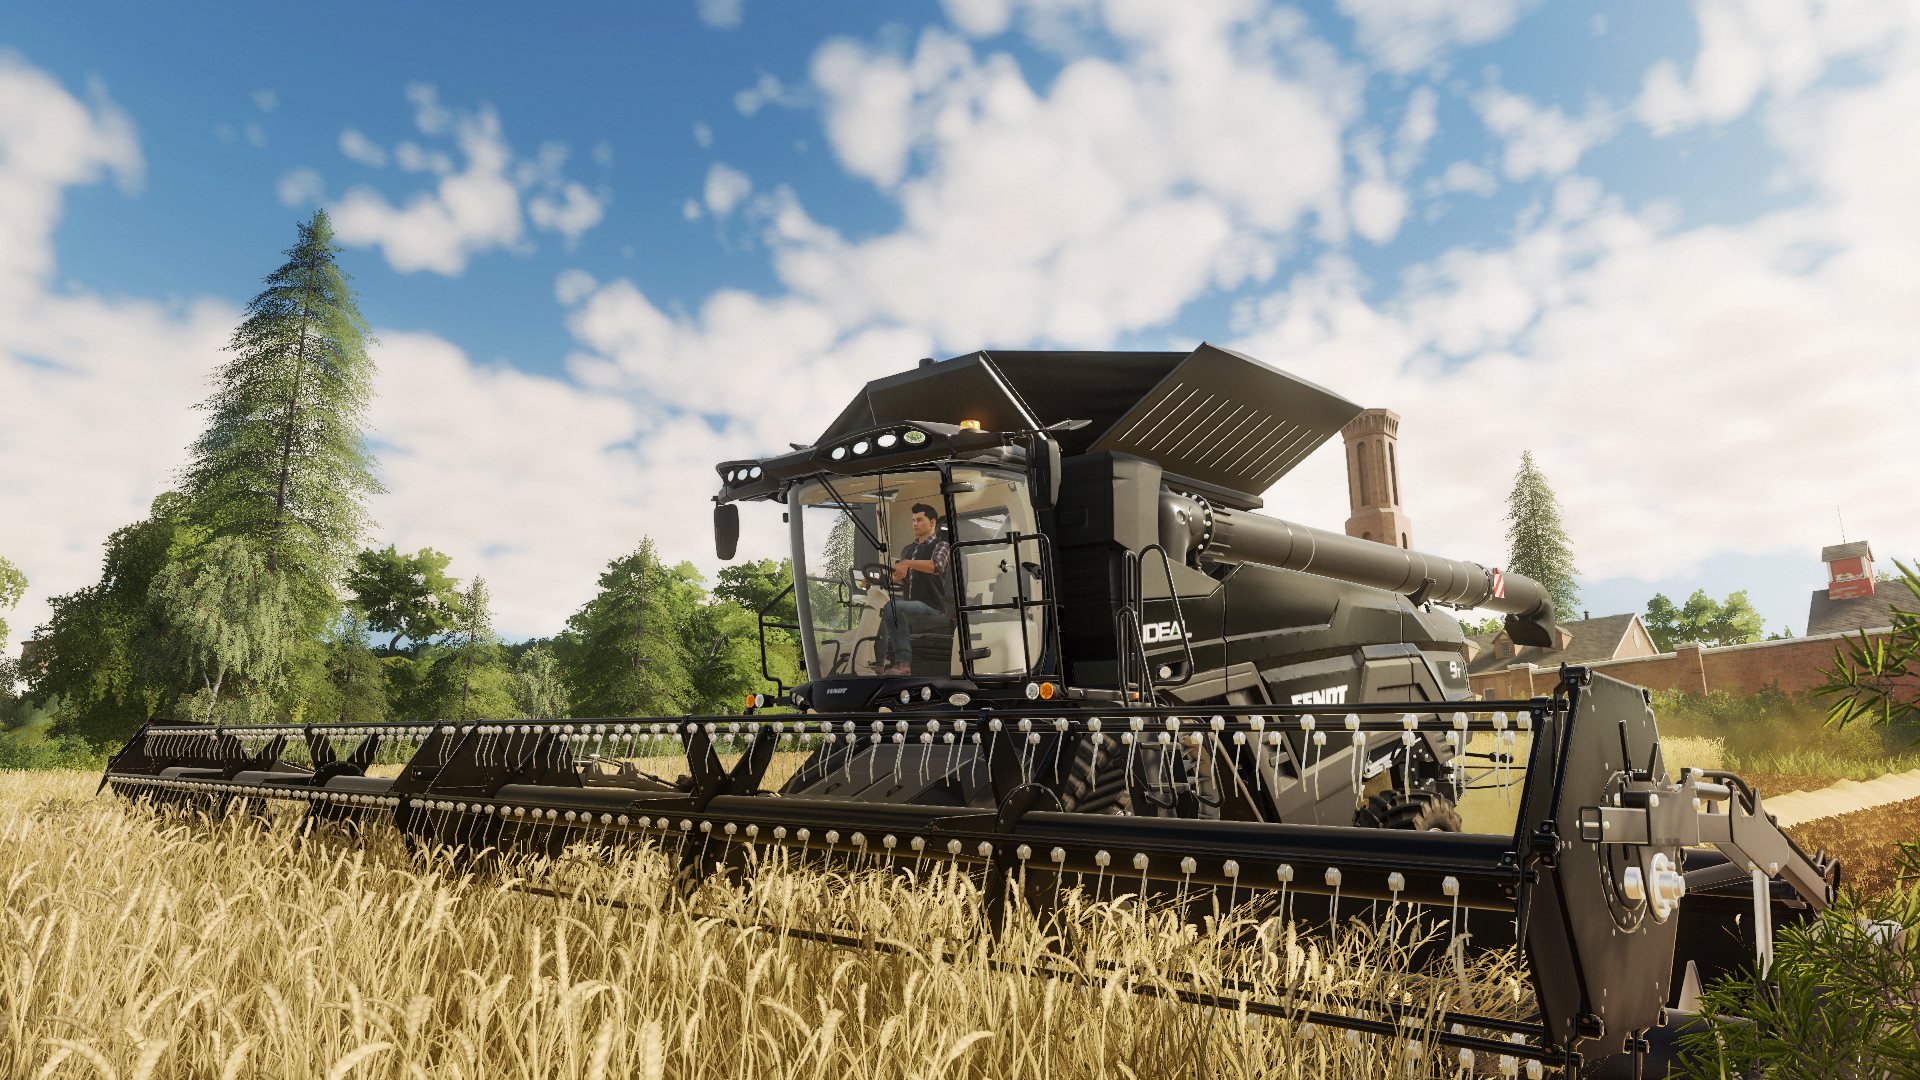 Farming Simulator 19 Epic Games Account